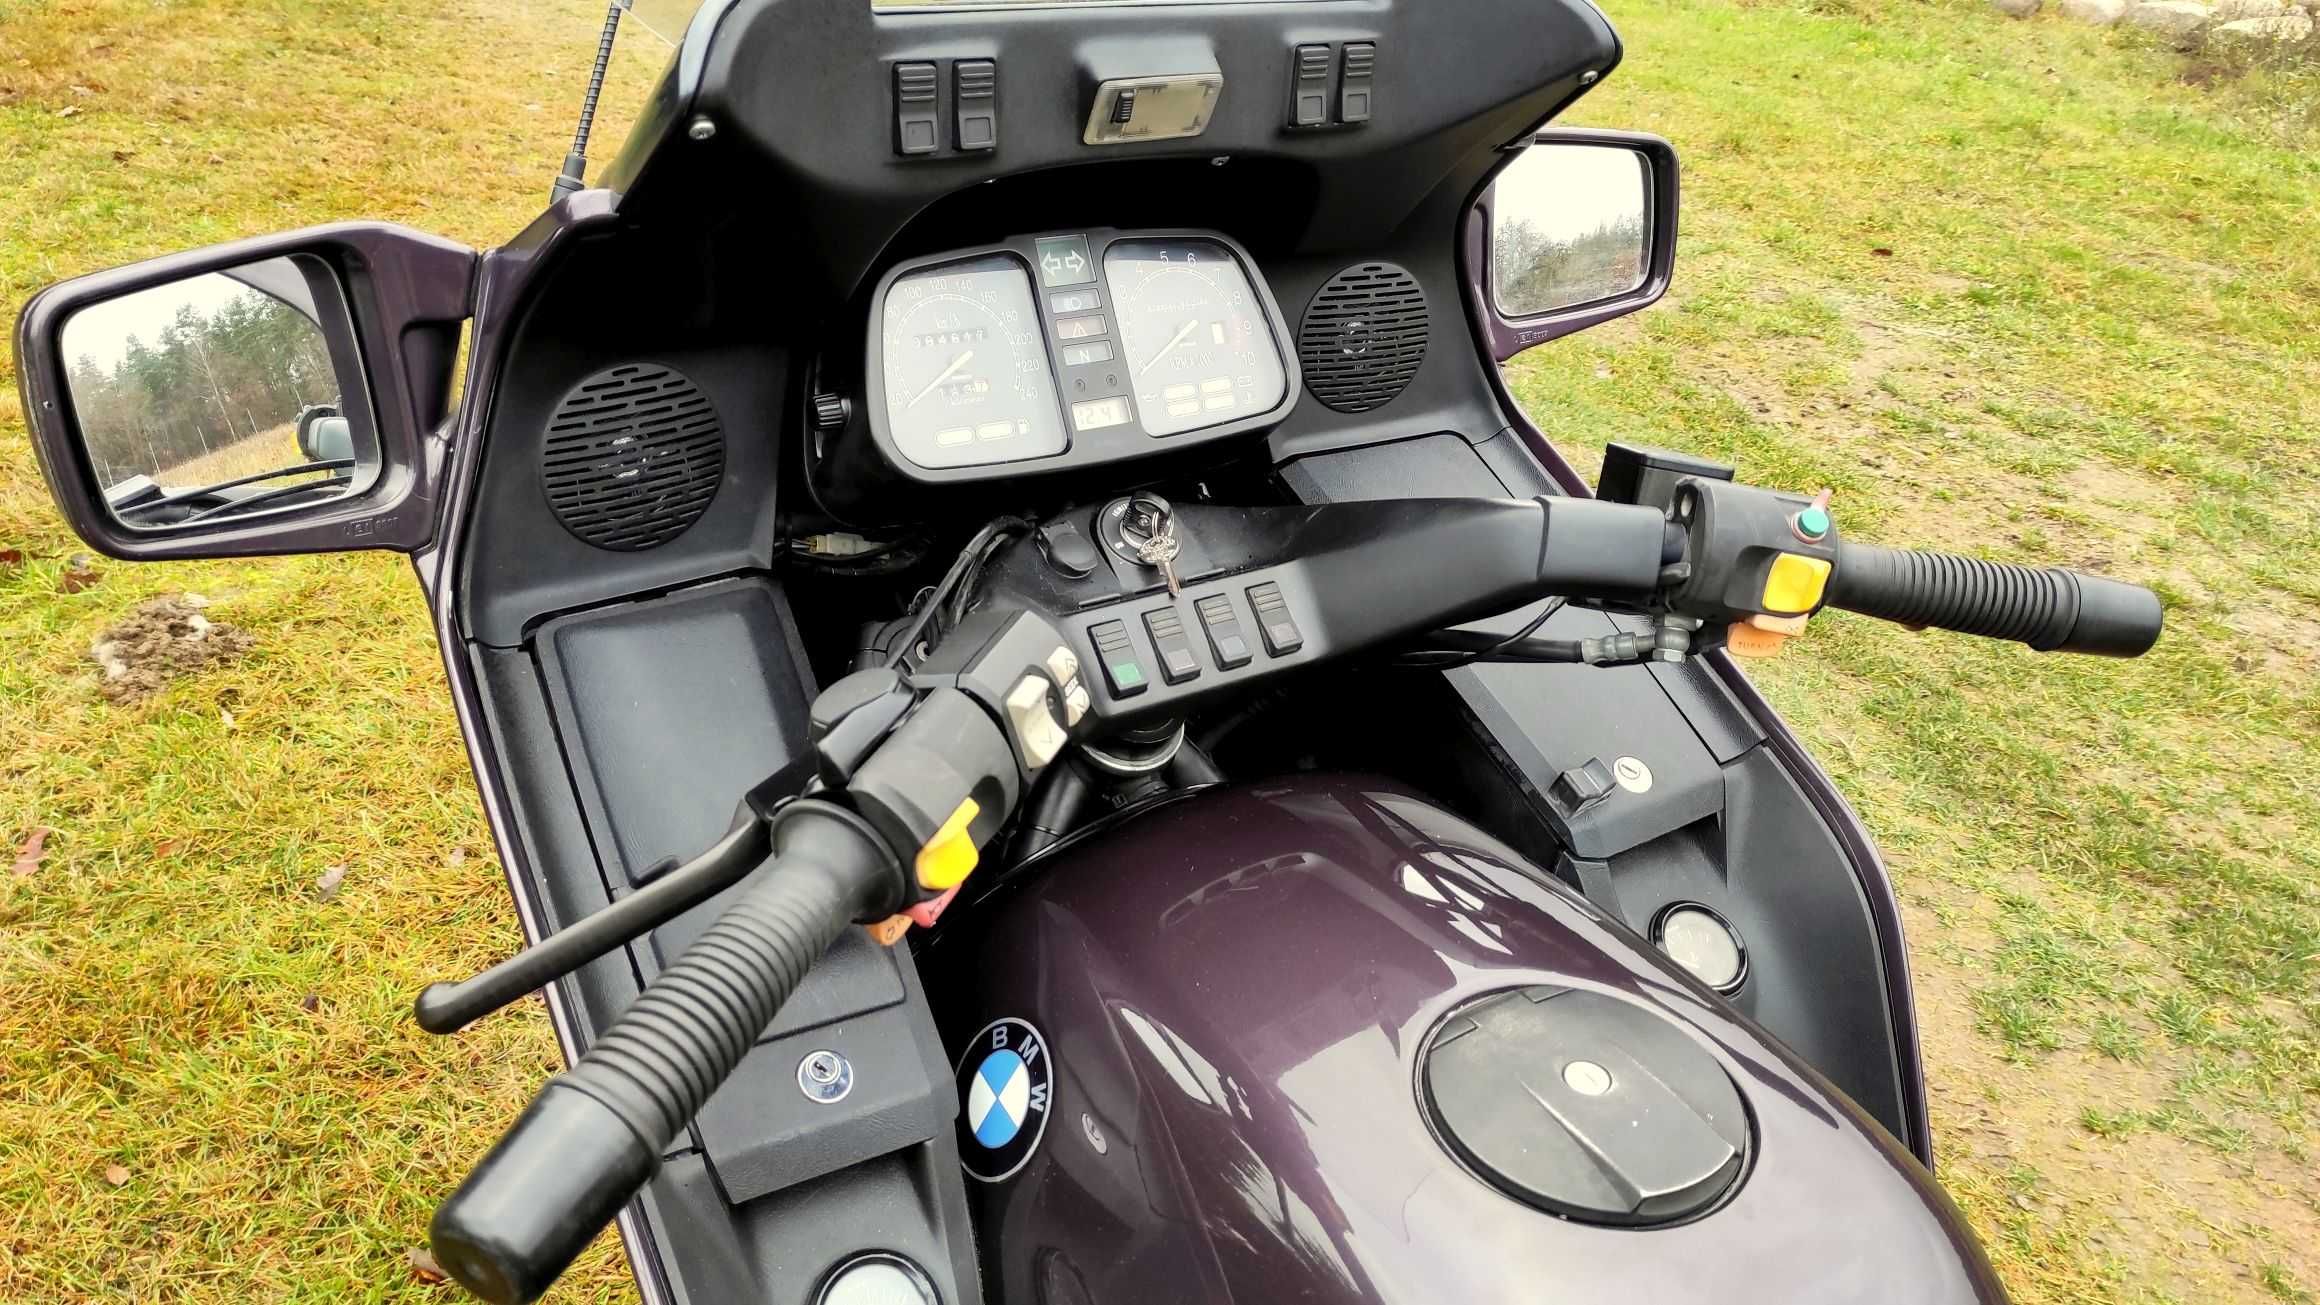 BMW K1100 LT ABS, kufry, radio, regulowana szyba